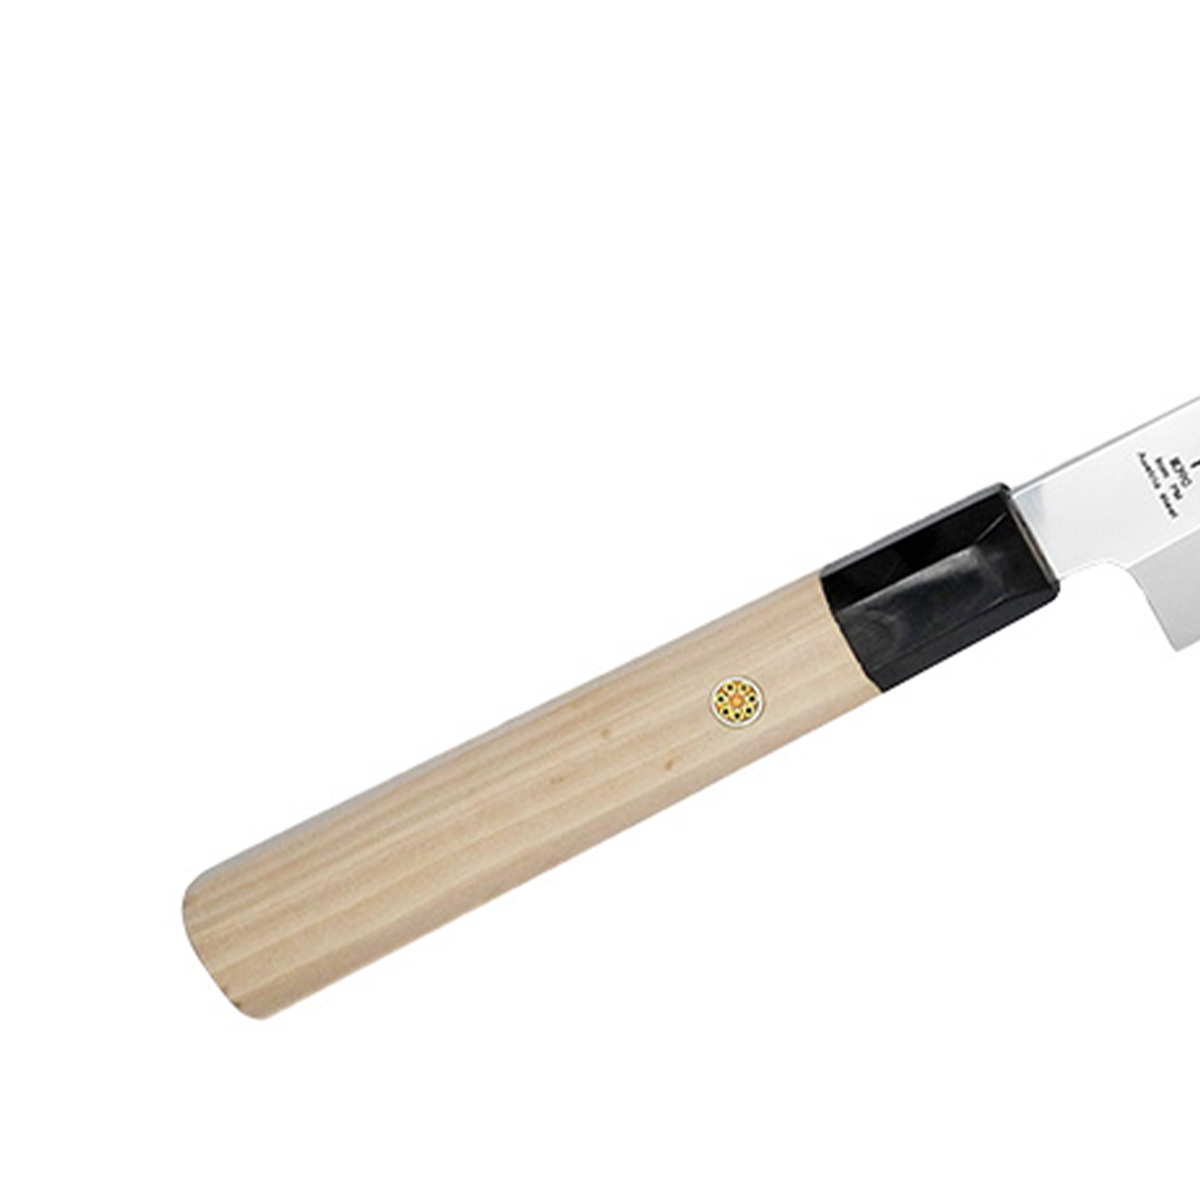 aceut愛士卡頂級刀具::24公分柳刃-m390 全鋼八角朴木柄愛士卡頂級廚刀